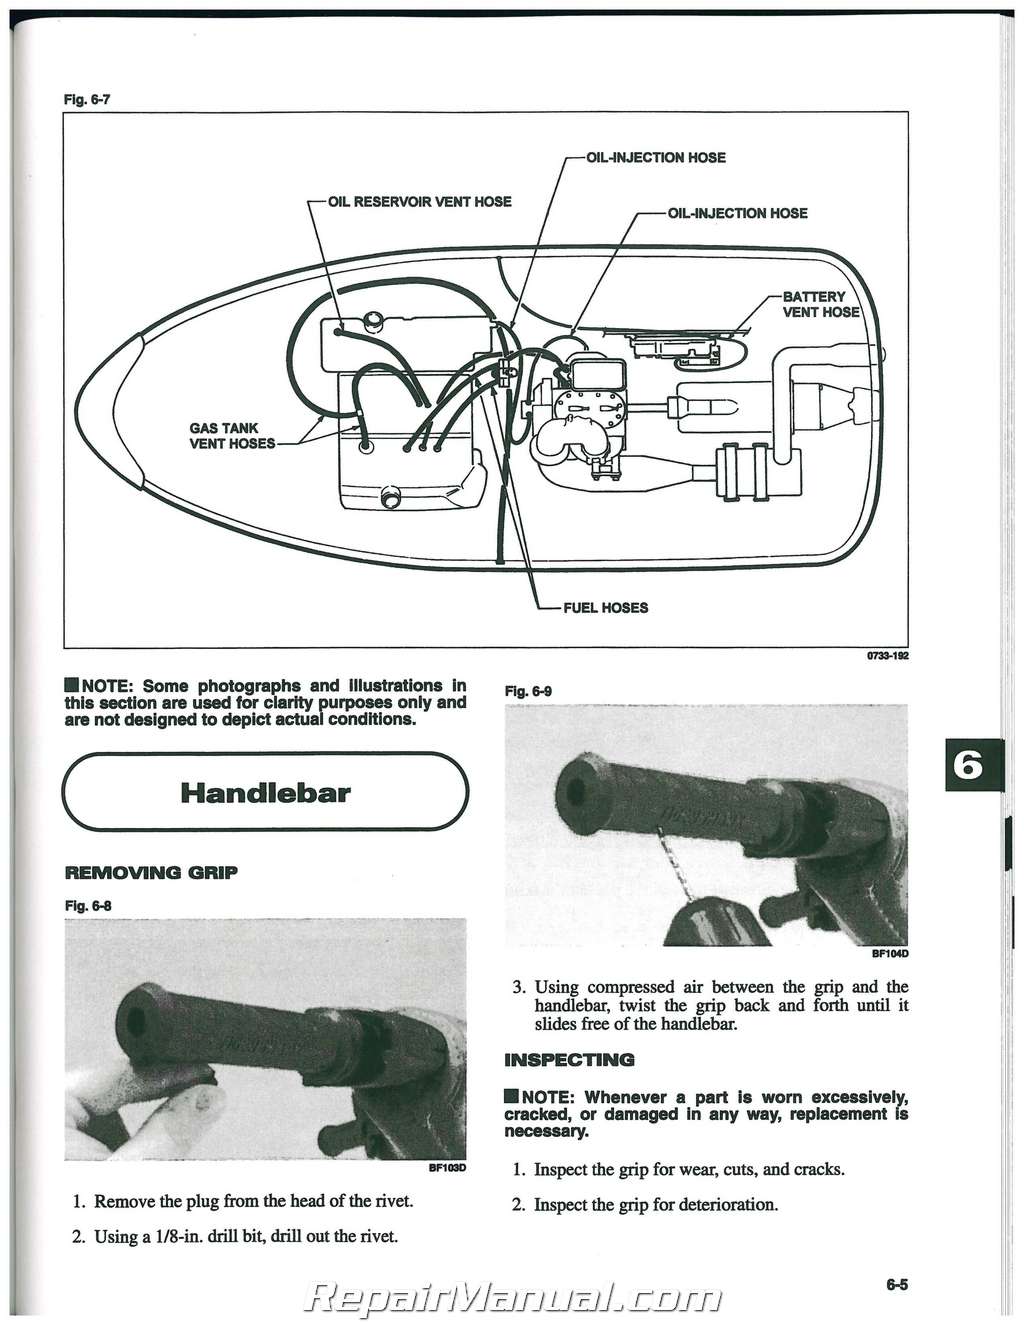 1997 Tigershark Montego And Monte Carlo 640 Service Manual